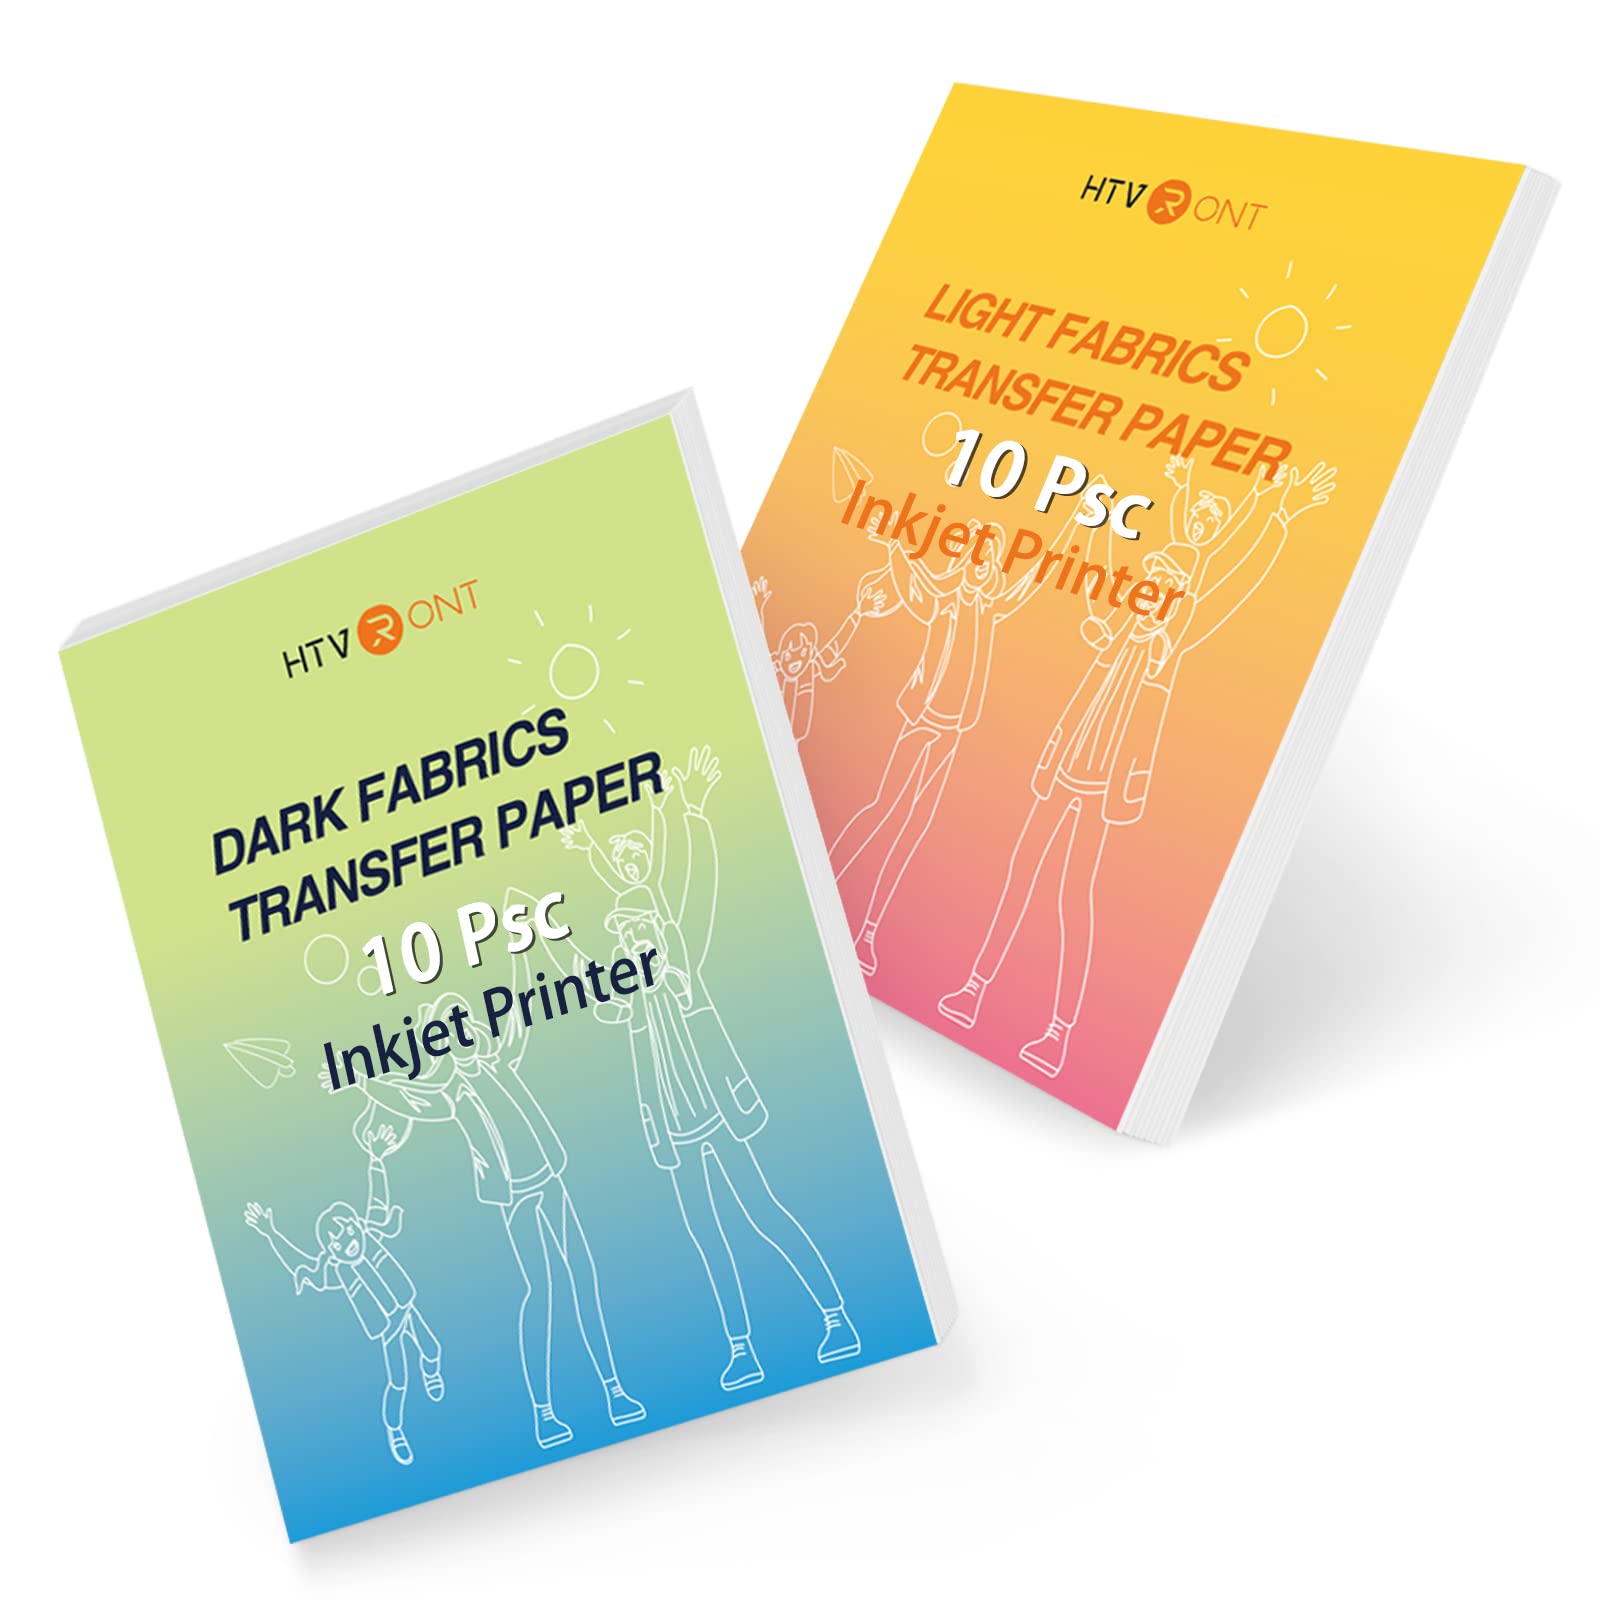 Printable Heat Transfer Vinyl Paper Inkjet Printer Kuwait